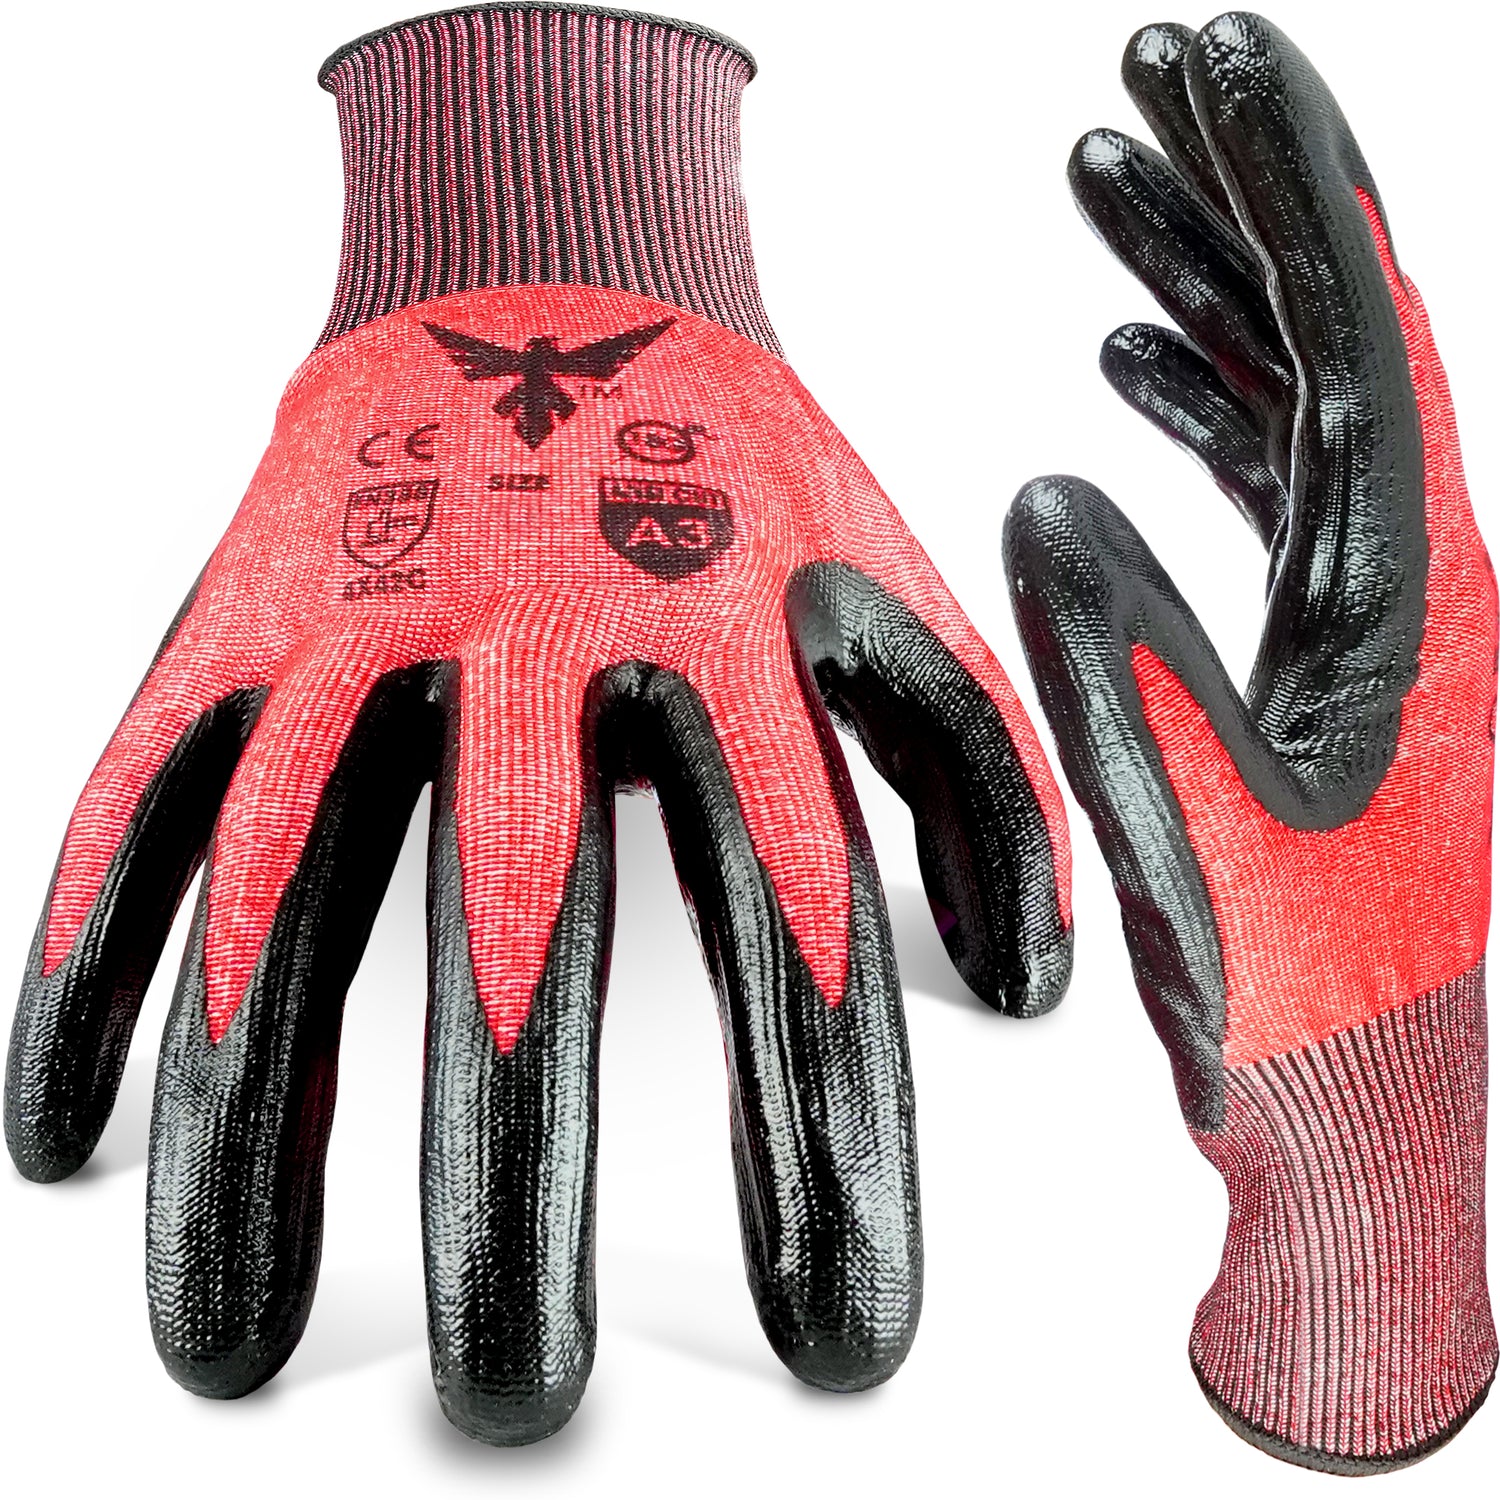 Horus Works Cut Proof Work Gloves